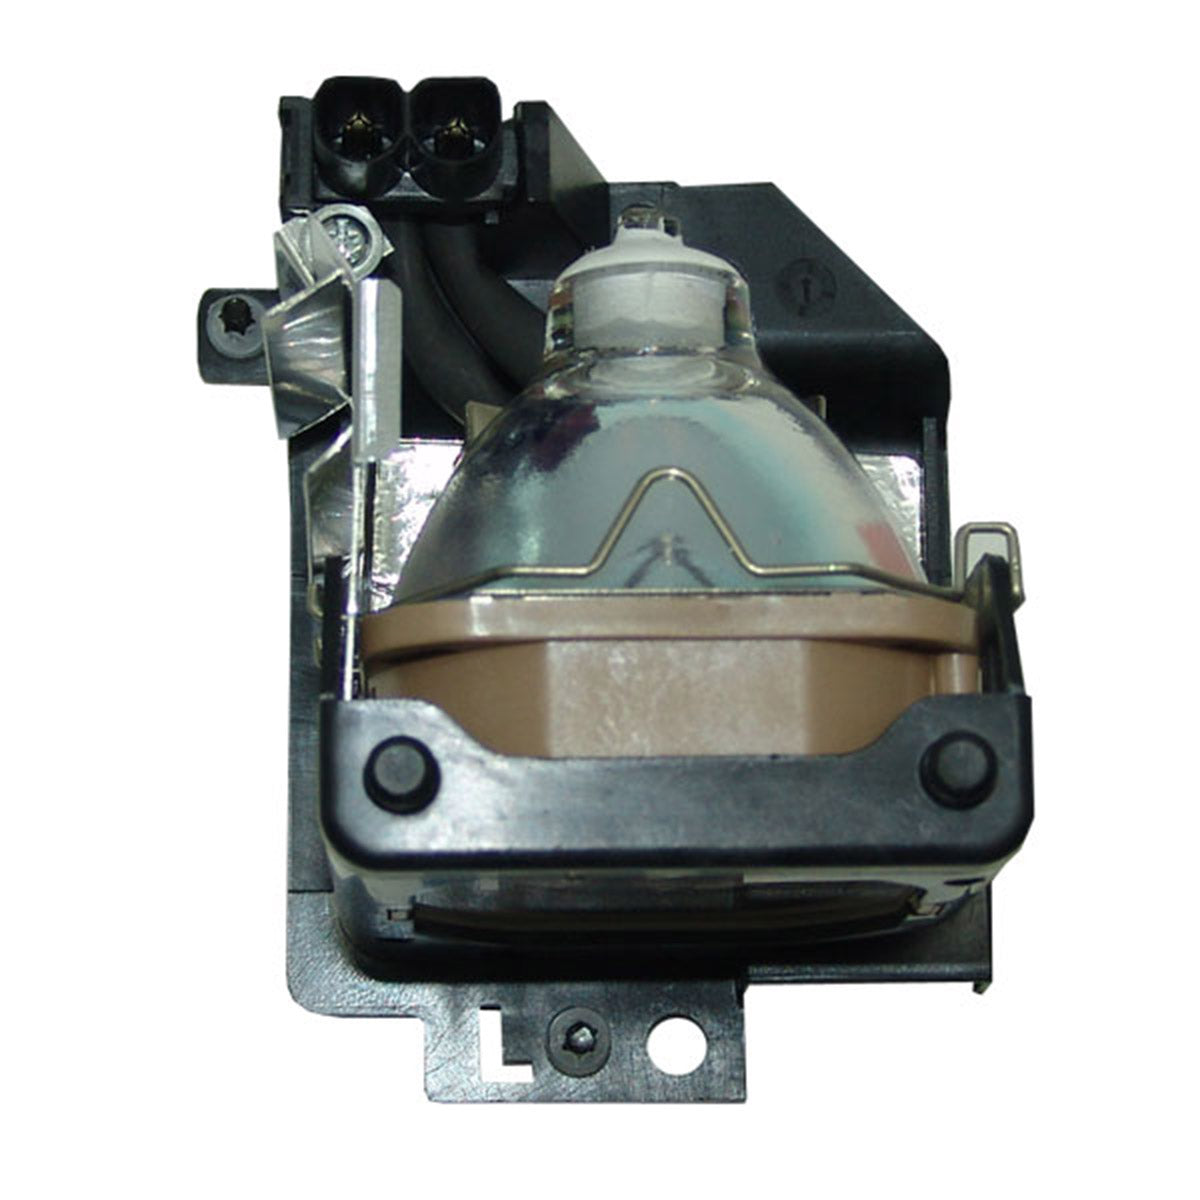 Boxlight CP324i-930 Compatible Projector Lamp Module